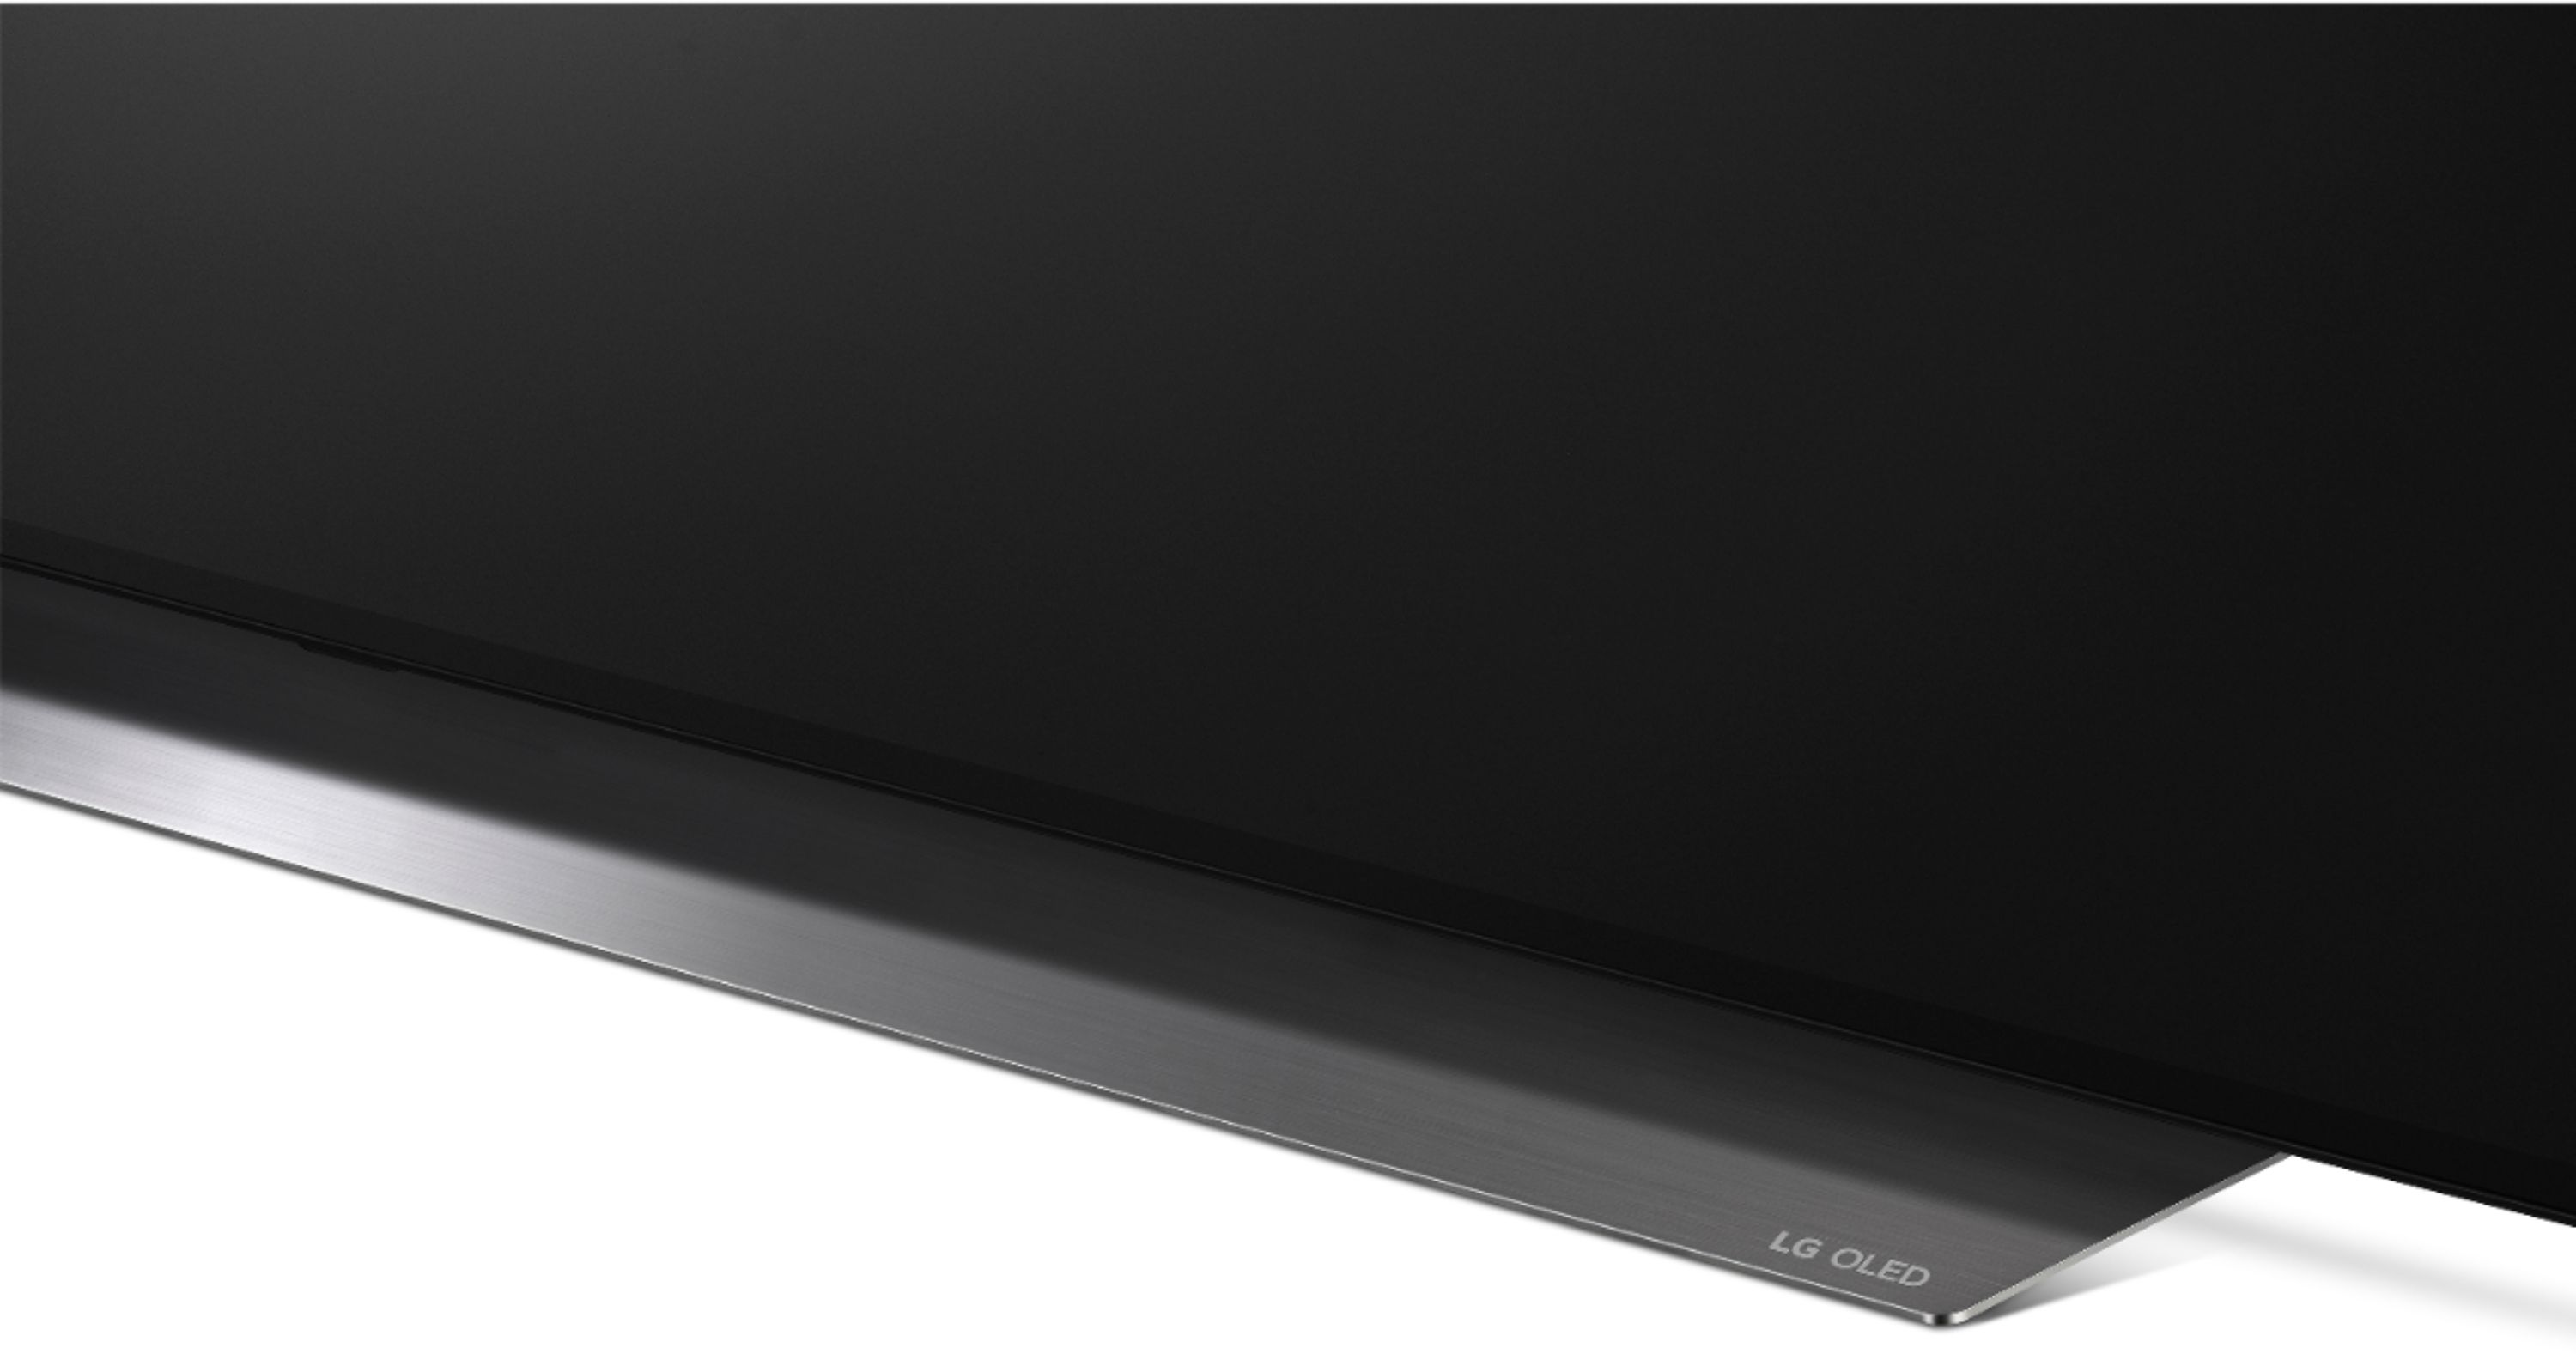 Best Buy: LG 55 Class C2 Series OLED evo 4K UHD Smart webOS TV OLED55C2PUA